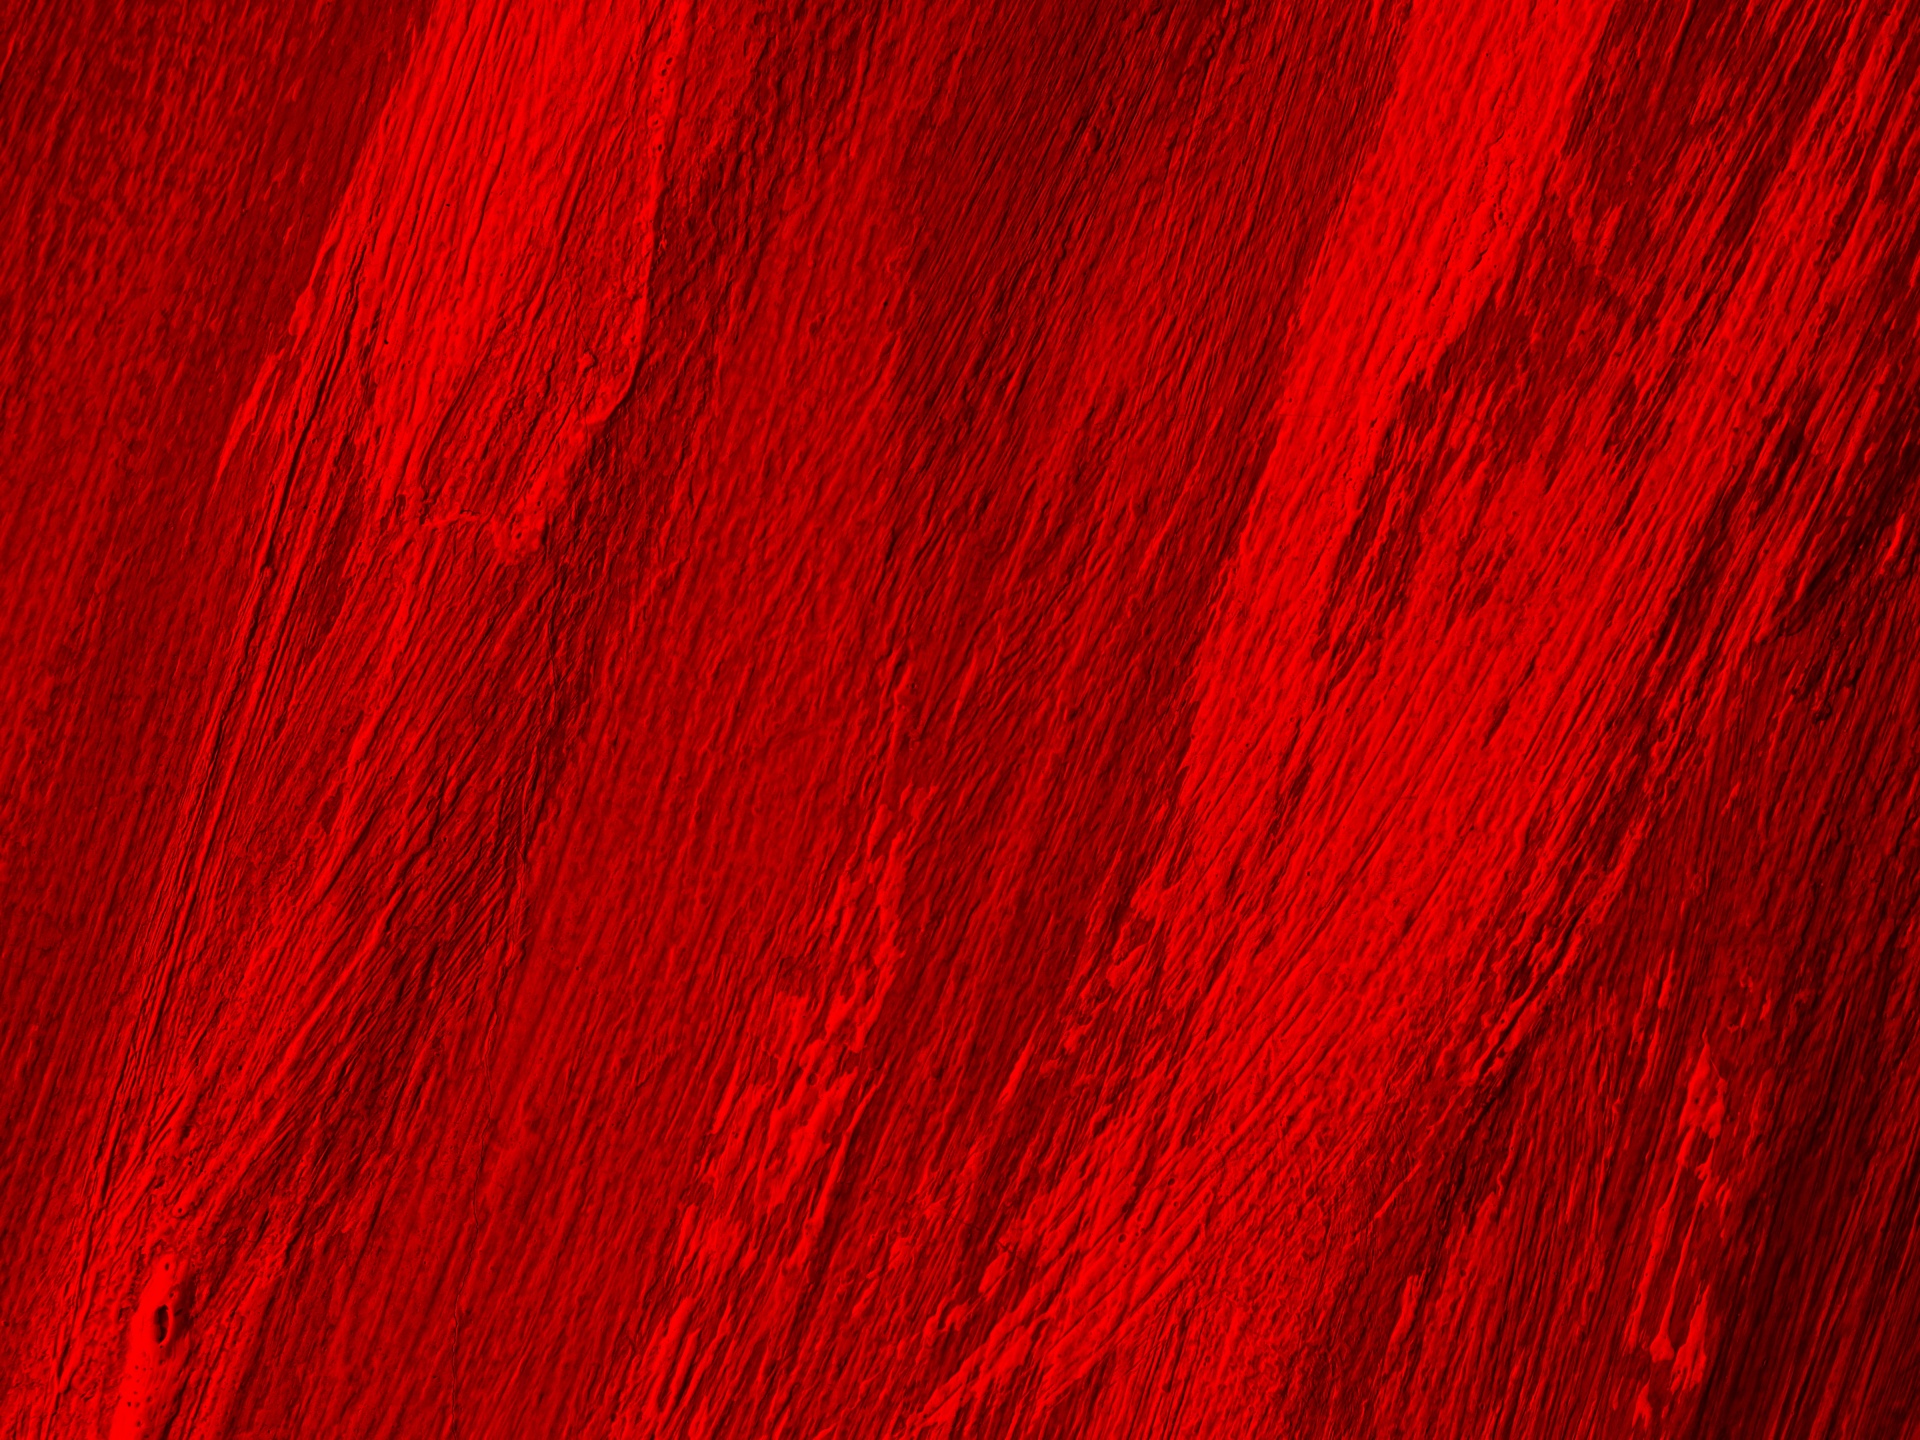 Red pages. Краска красная. Красная текстура. Красная краска текстура. Красное дерево текстура.